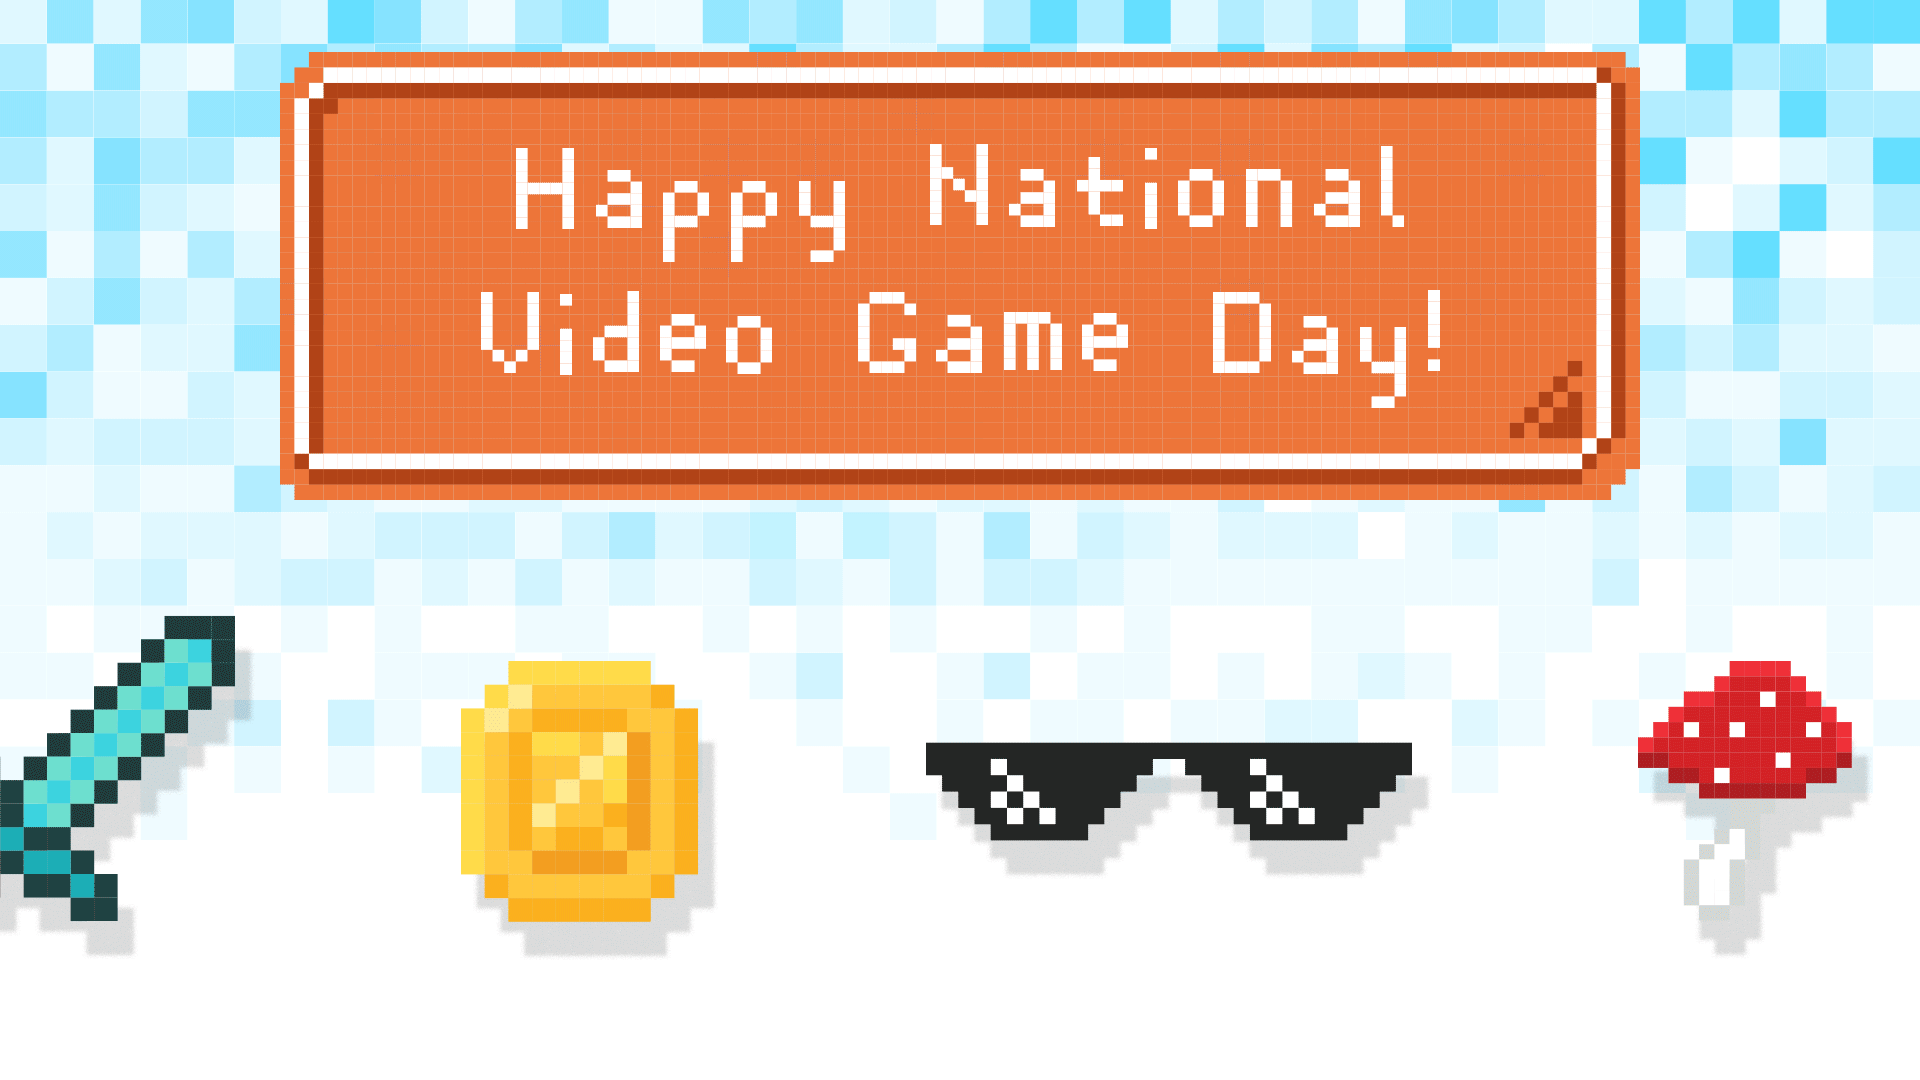 National_gameday_social_1920x1080.gif